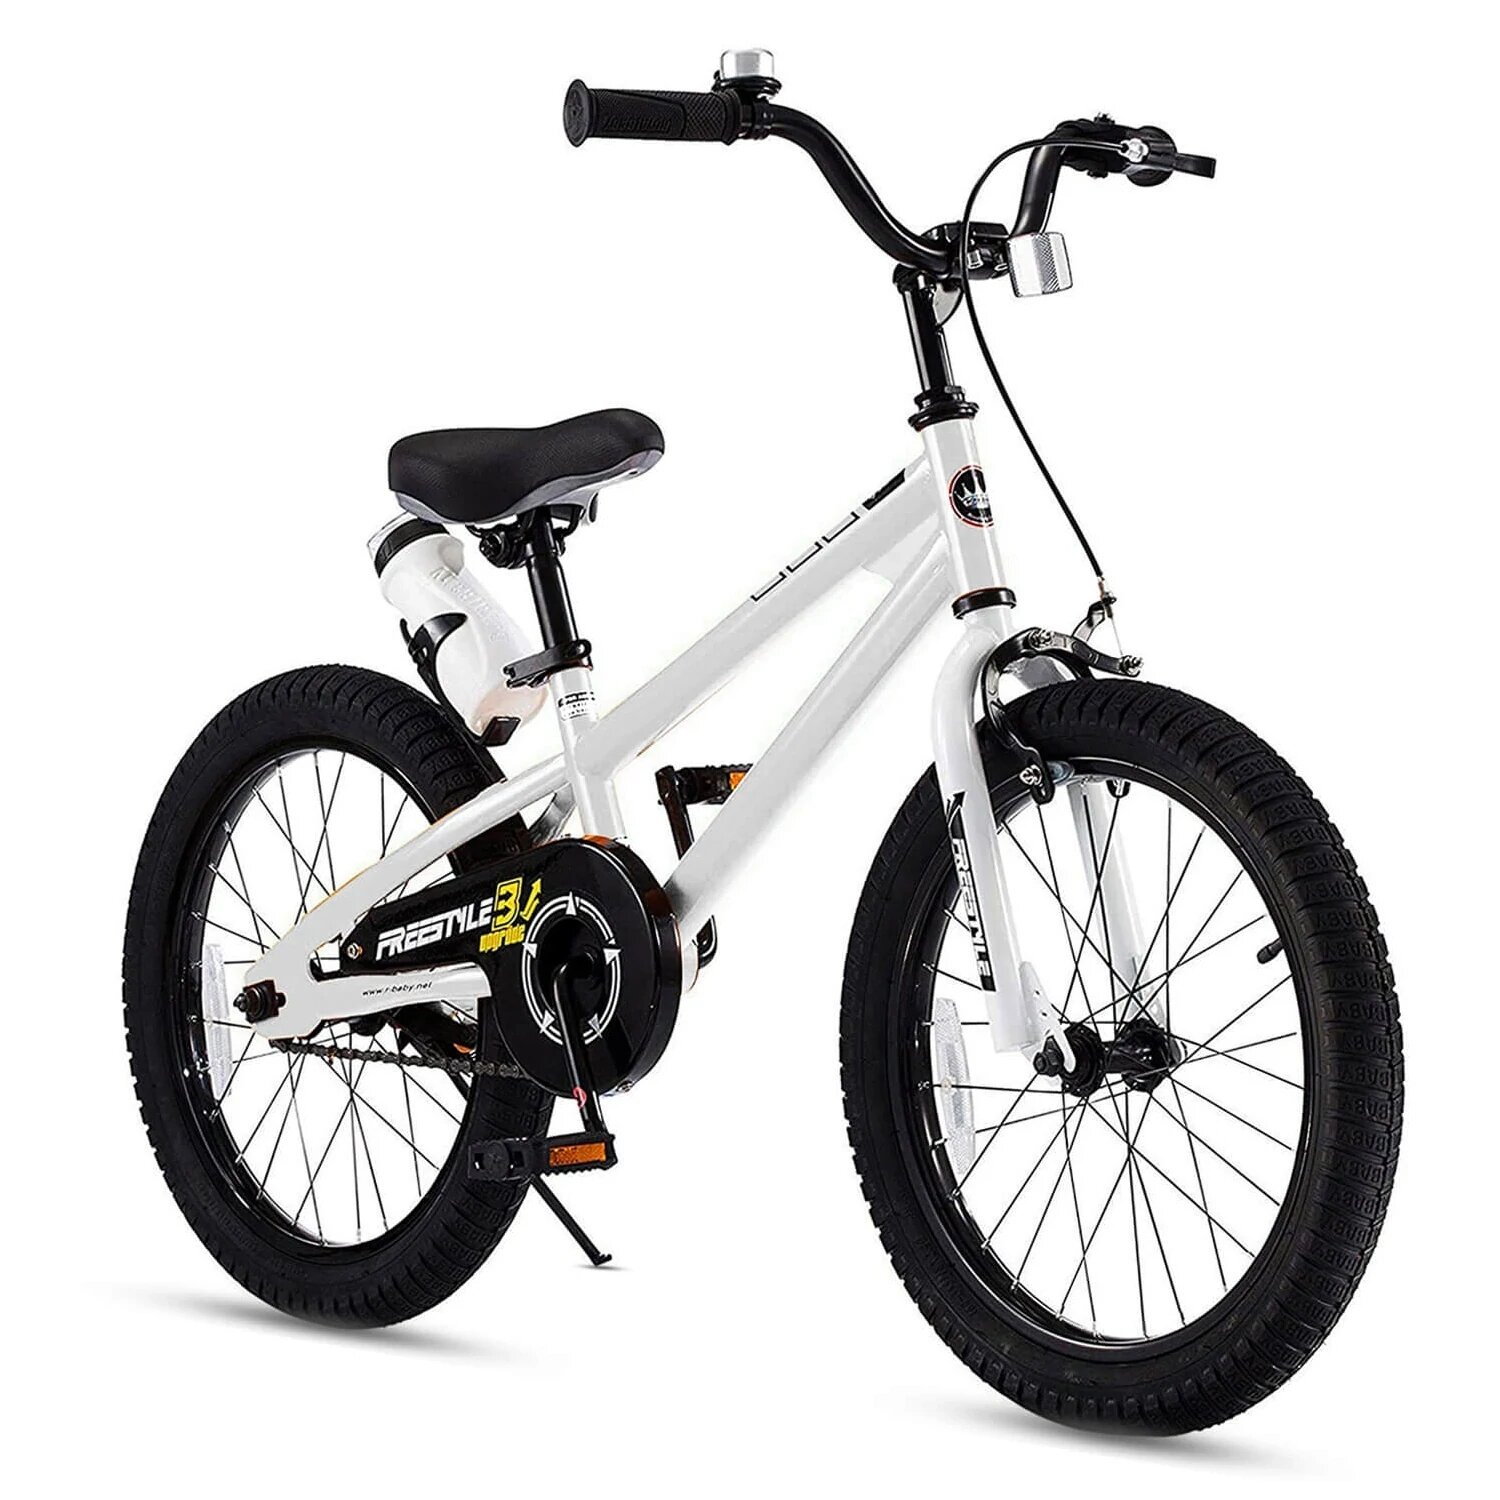 Image of [EU Direct] RoyalBaby Freestyle Children's Bicycle 18 Inch Kids Bike BMX Stabilisers Balance Bike Boys Girls Gift